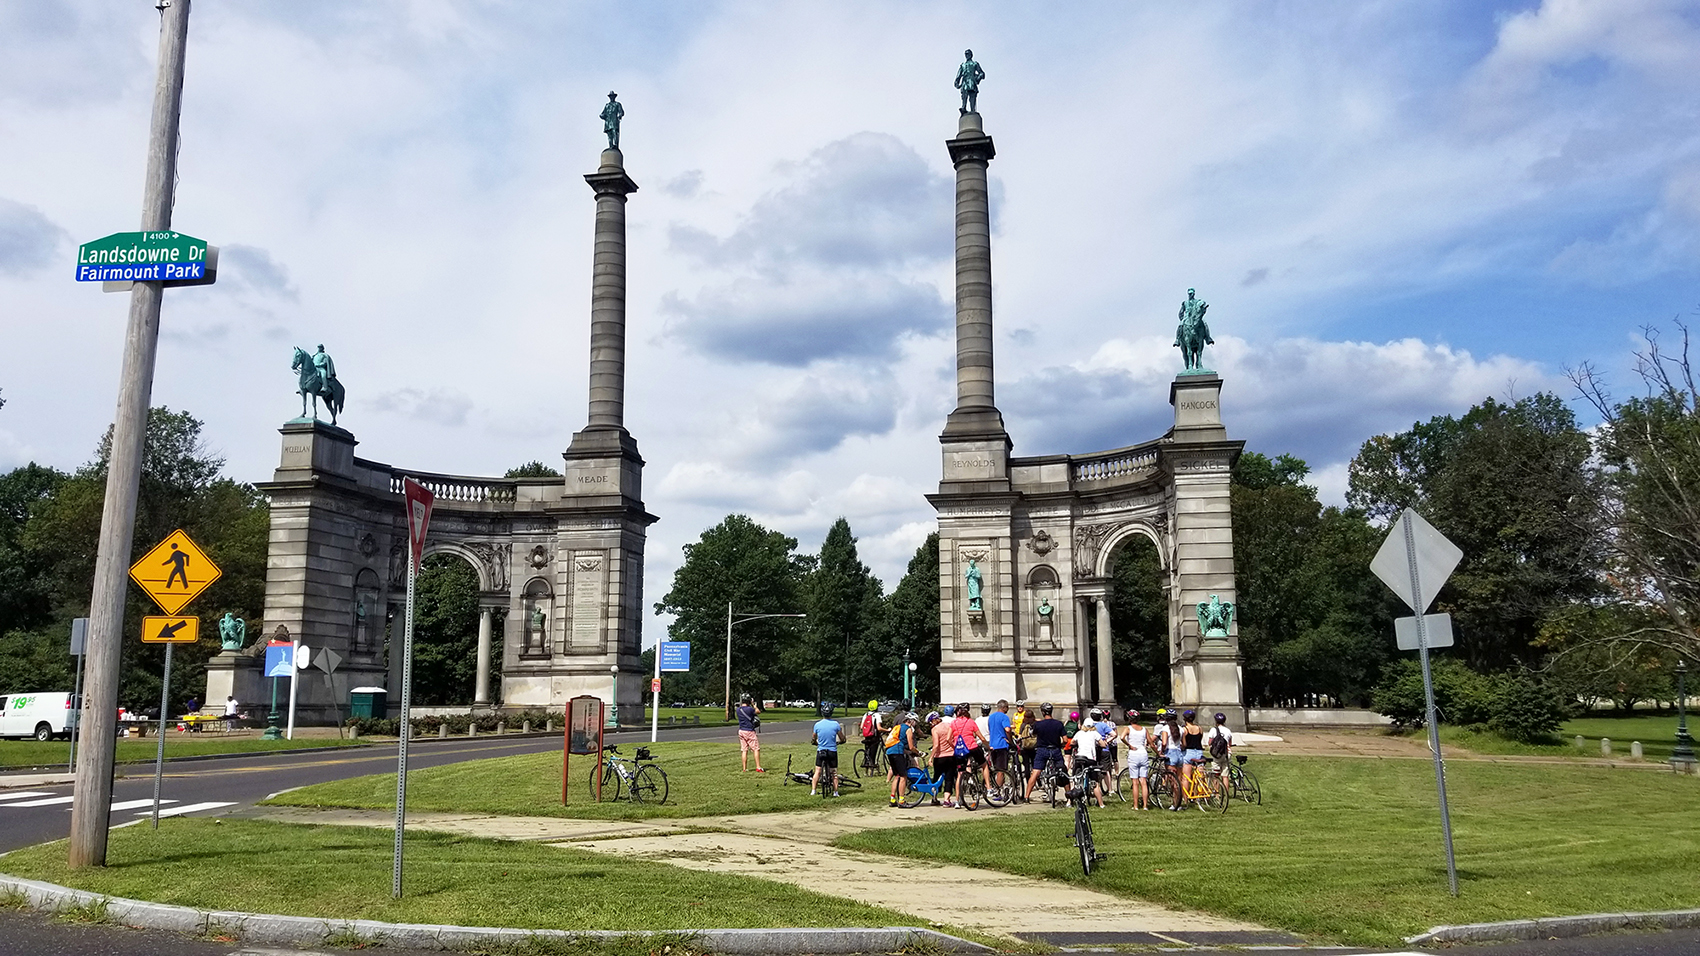 Public art bike tour through Fairmount Park - the Smith Memorial Arch stop